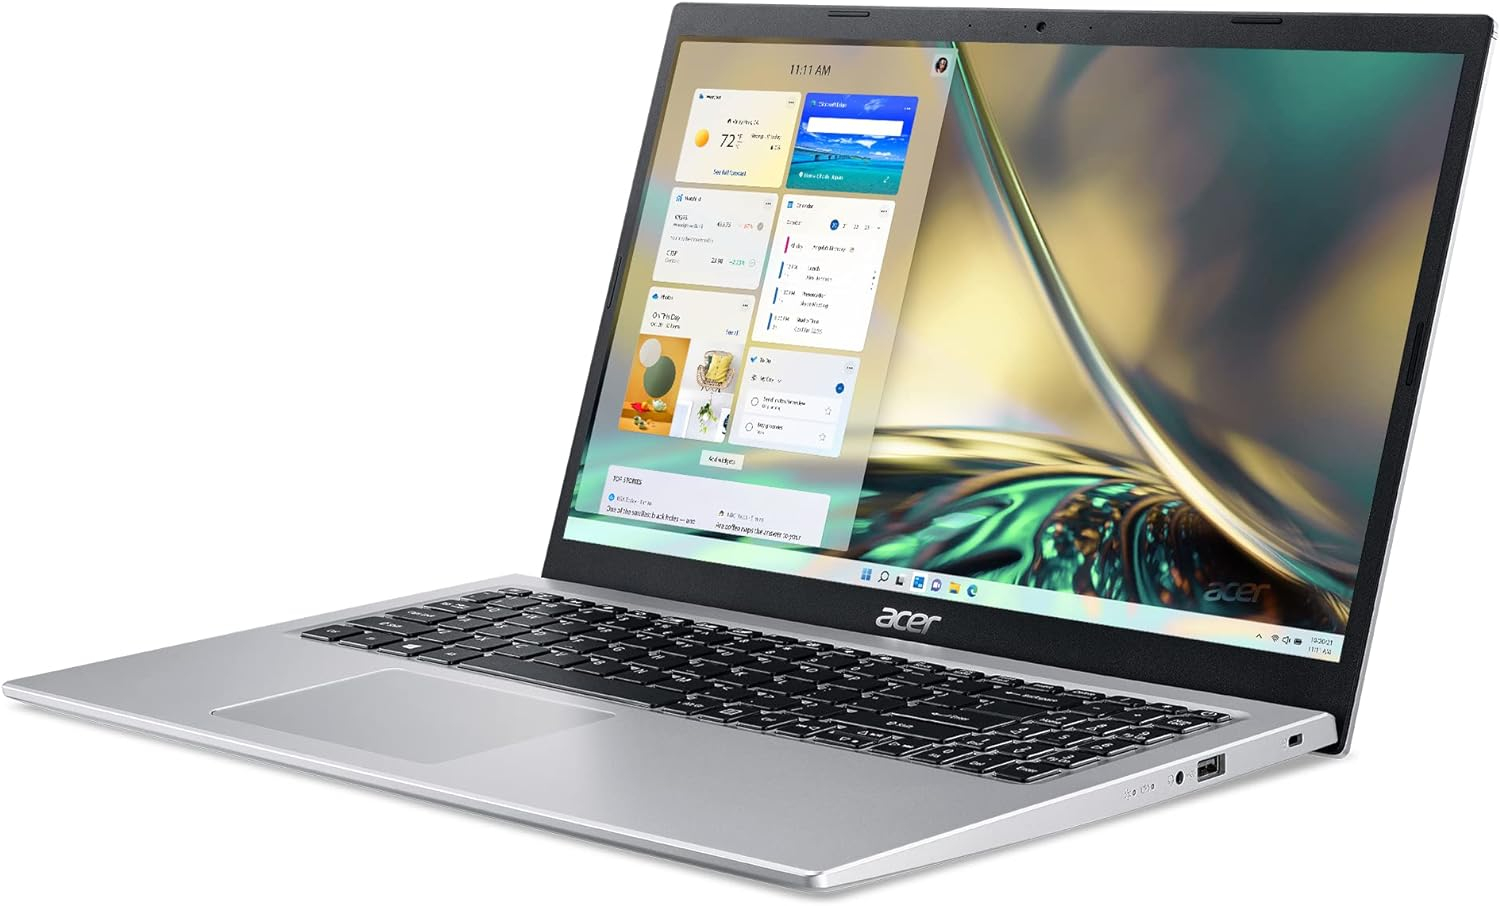 Acer Aspire 5 A515-56-347N Slim Laptop - 15.6 Full HD IPS Display - 11th Gen Intel i3-1115G4 Dual Core Processor - 8GB DDR4 - 128GB NVMe SSD - WiFi 6 - Amazon Alexa - Windows 11 Home in S Mode,Silver